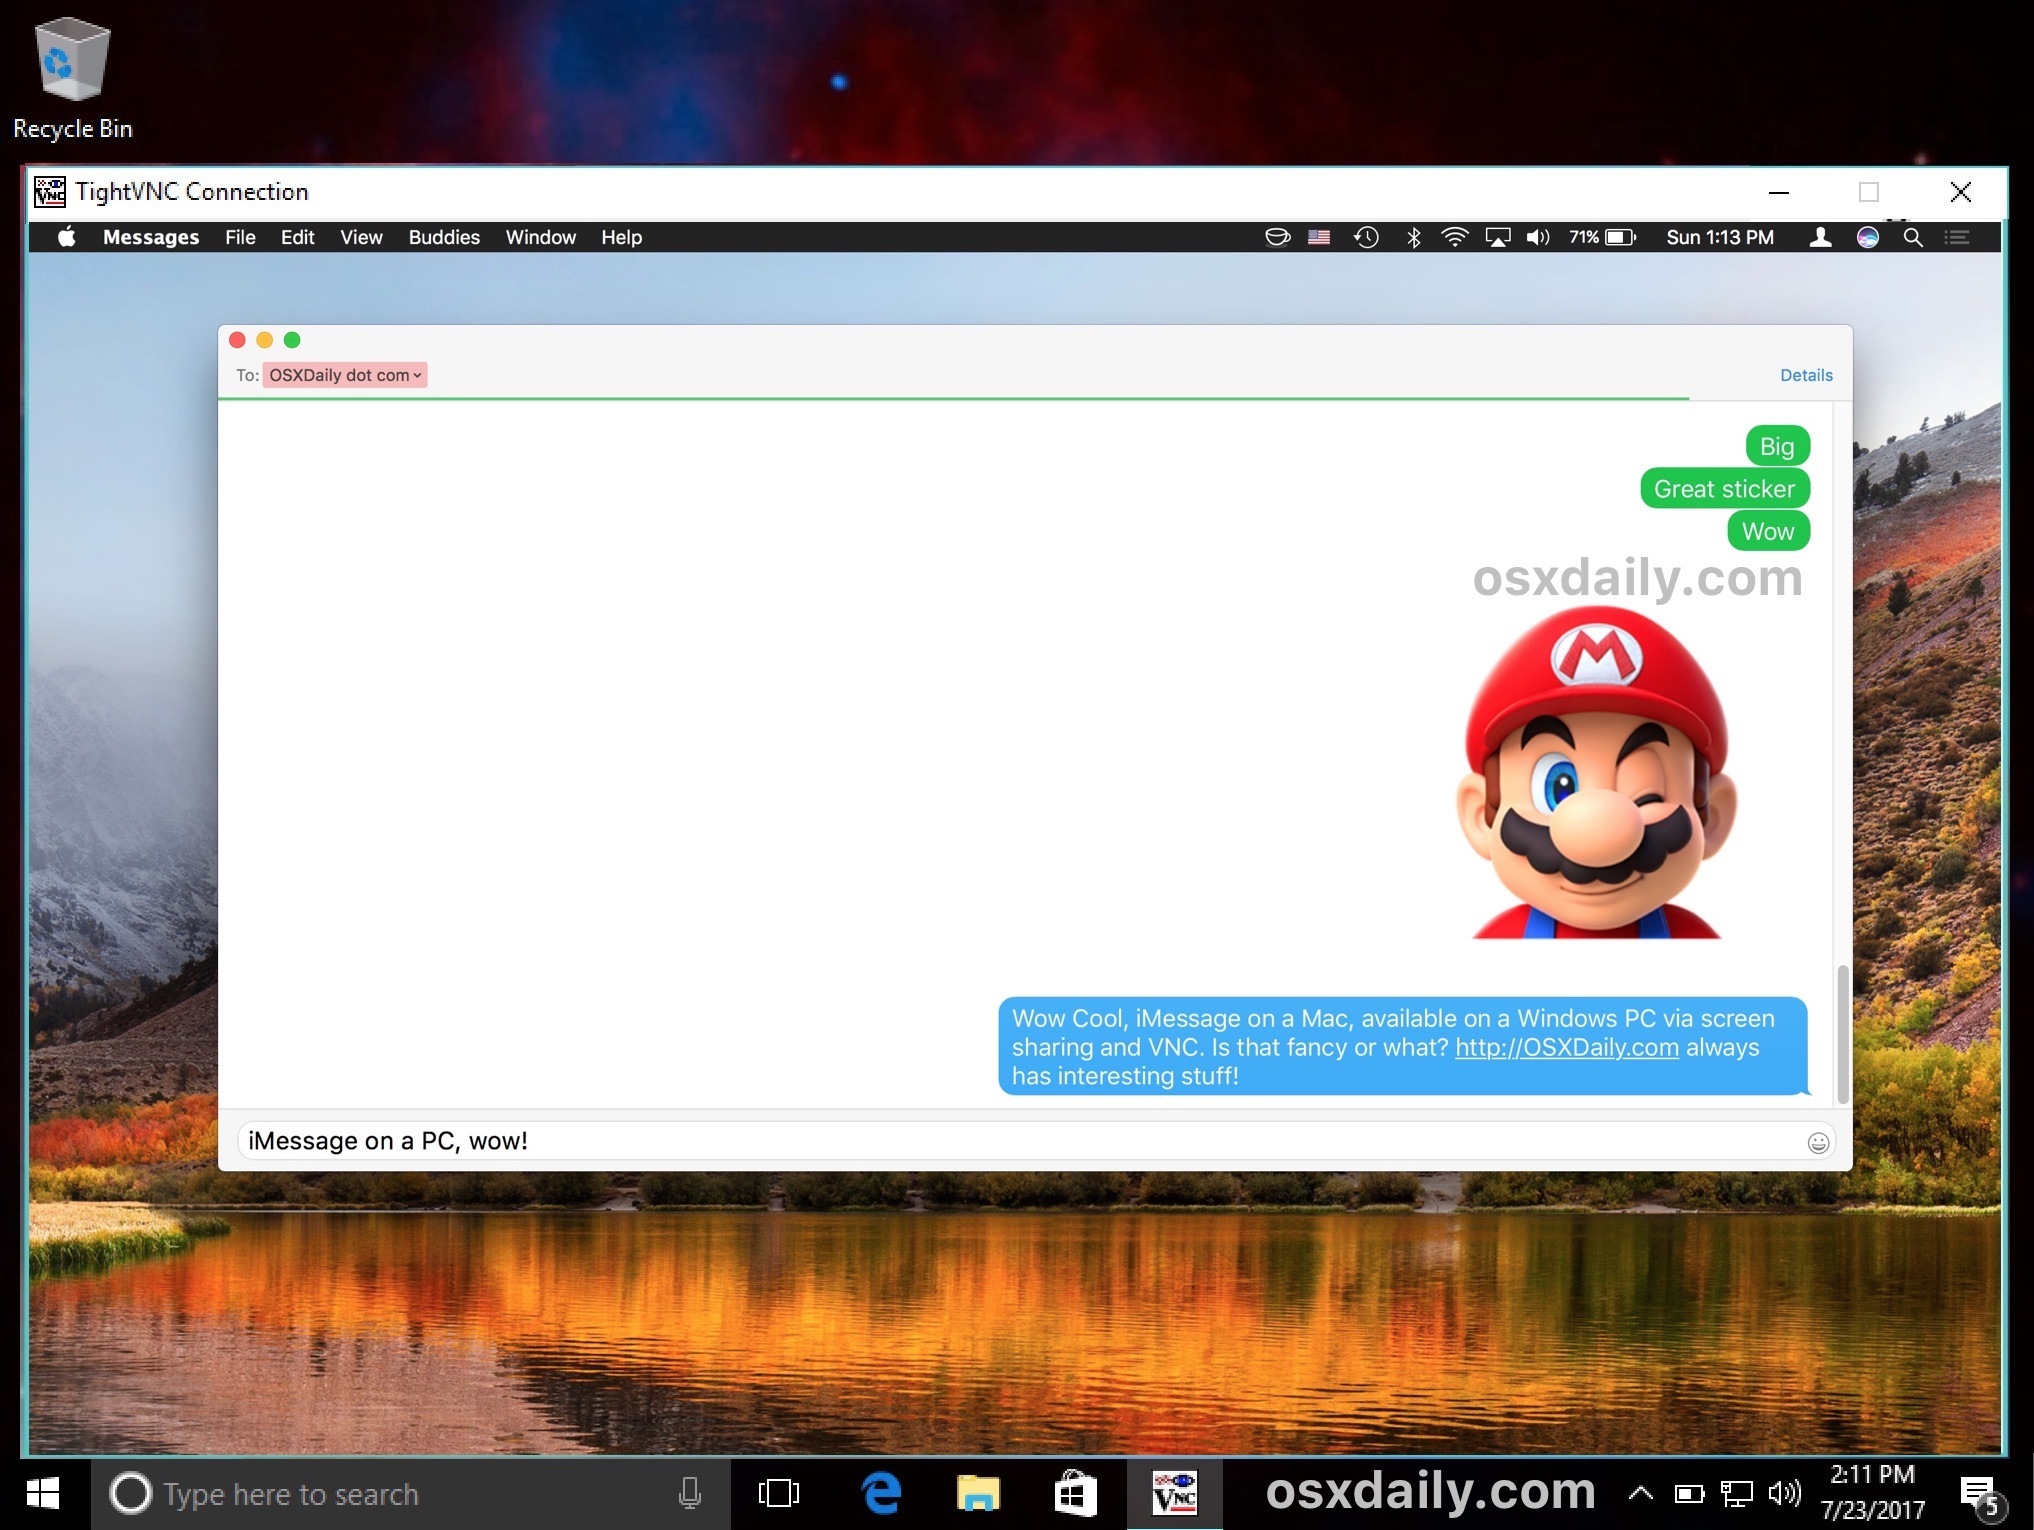 IMessage su PC tramite Screen Sharing di un Mac